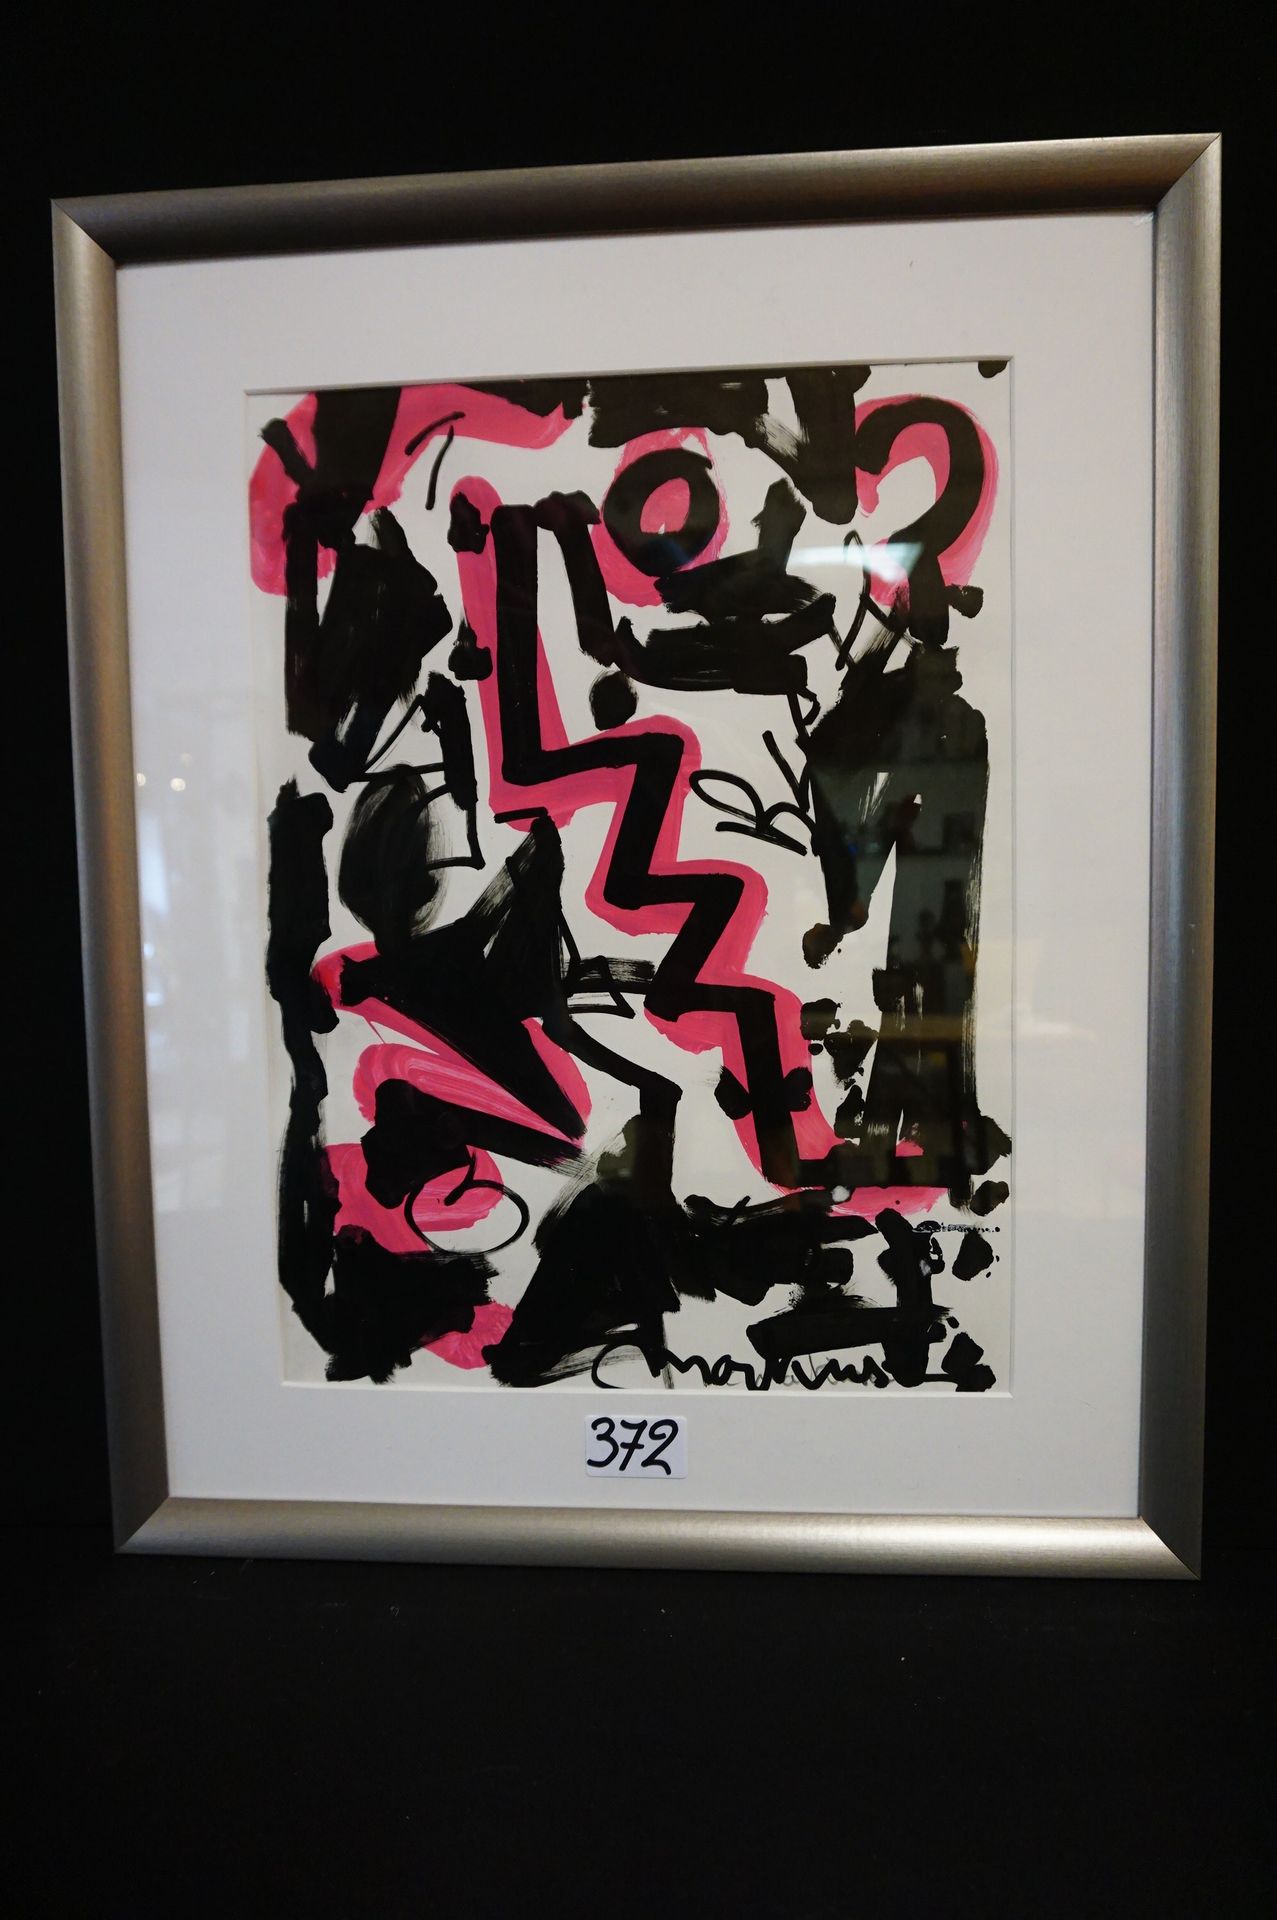 LUC MARTINSEN (1951 - ) "Moderne Komposition" - Acryl - Signiert - 38 x 28 cm